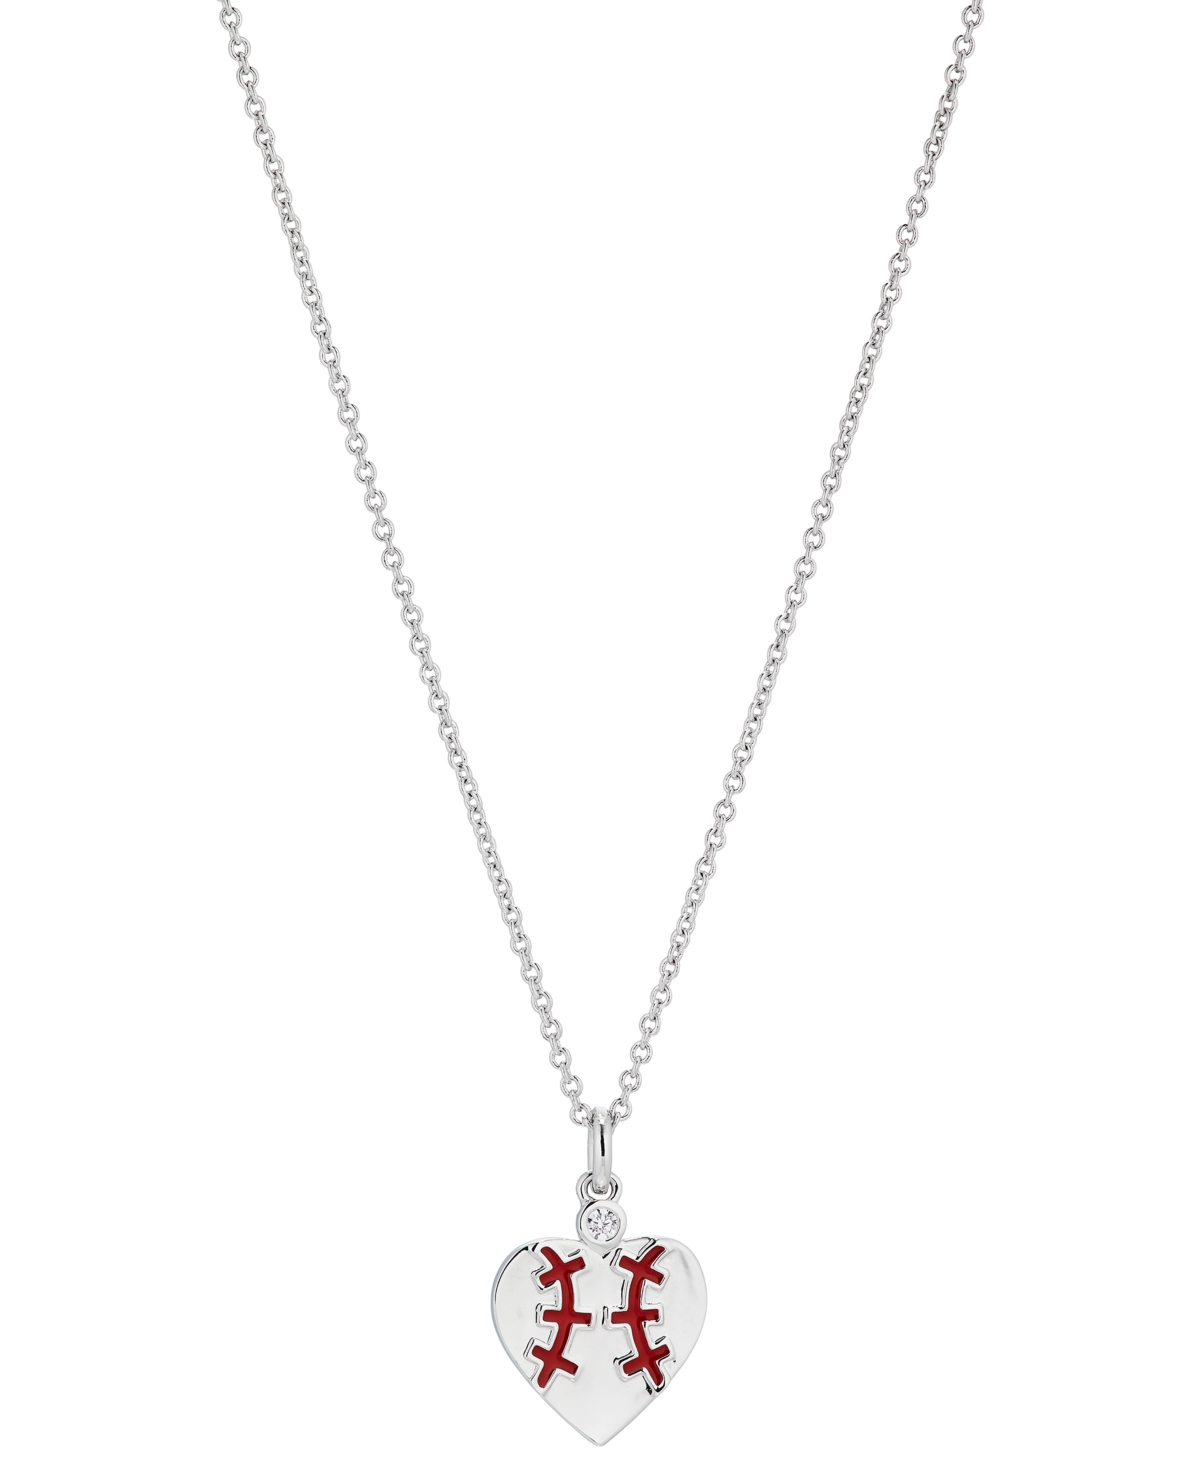 Silver-Tone Pave Baseball Heart Pendant Necklace, 16" + 2" extender - Silver